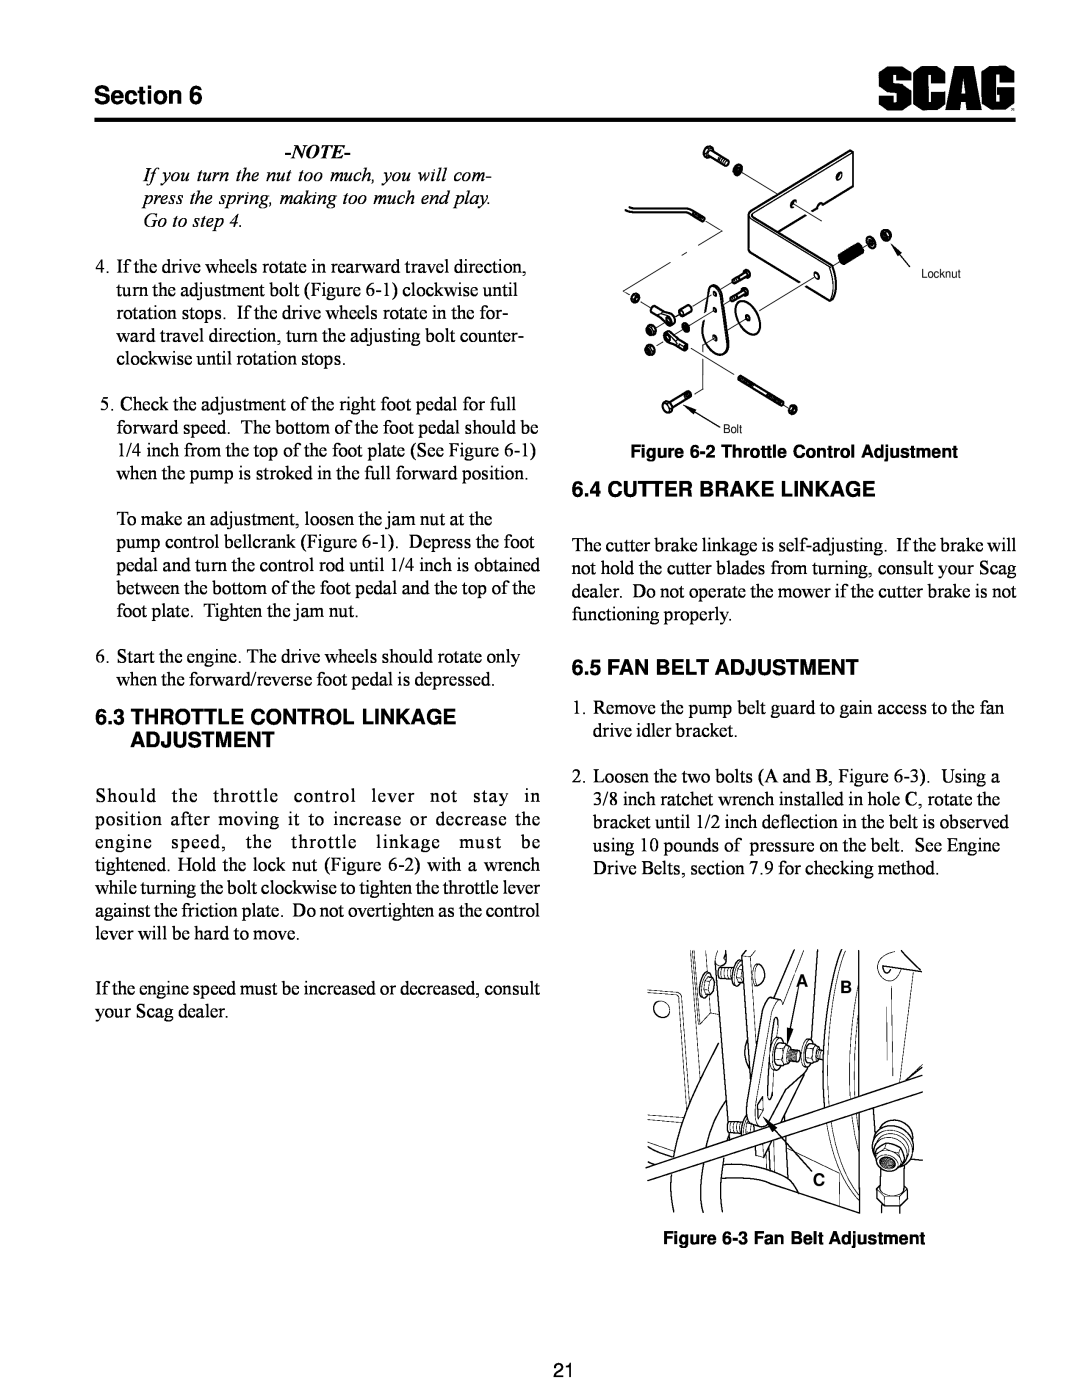 Scag Power Equipment MAG manual Throttle Control Linkage Adjustment, Cutter Brake Linkage, Fan Belt Adjustment, Section 